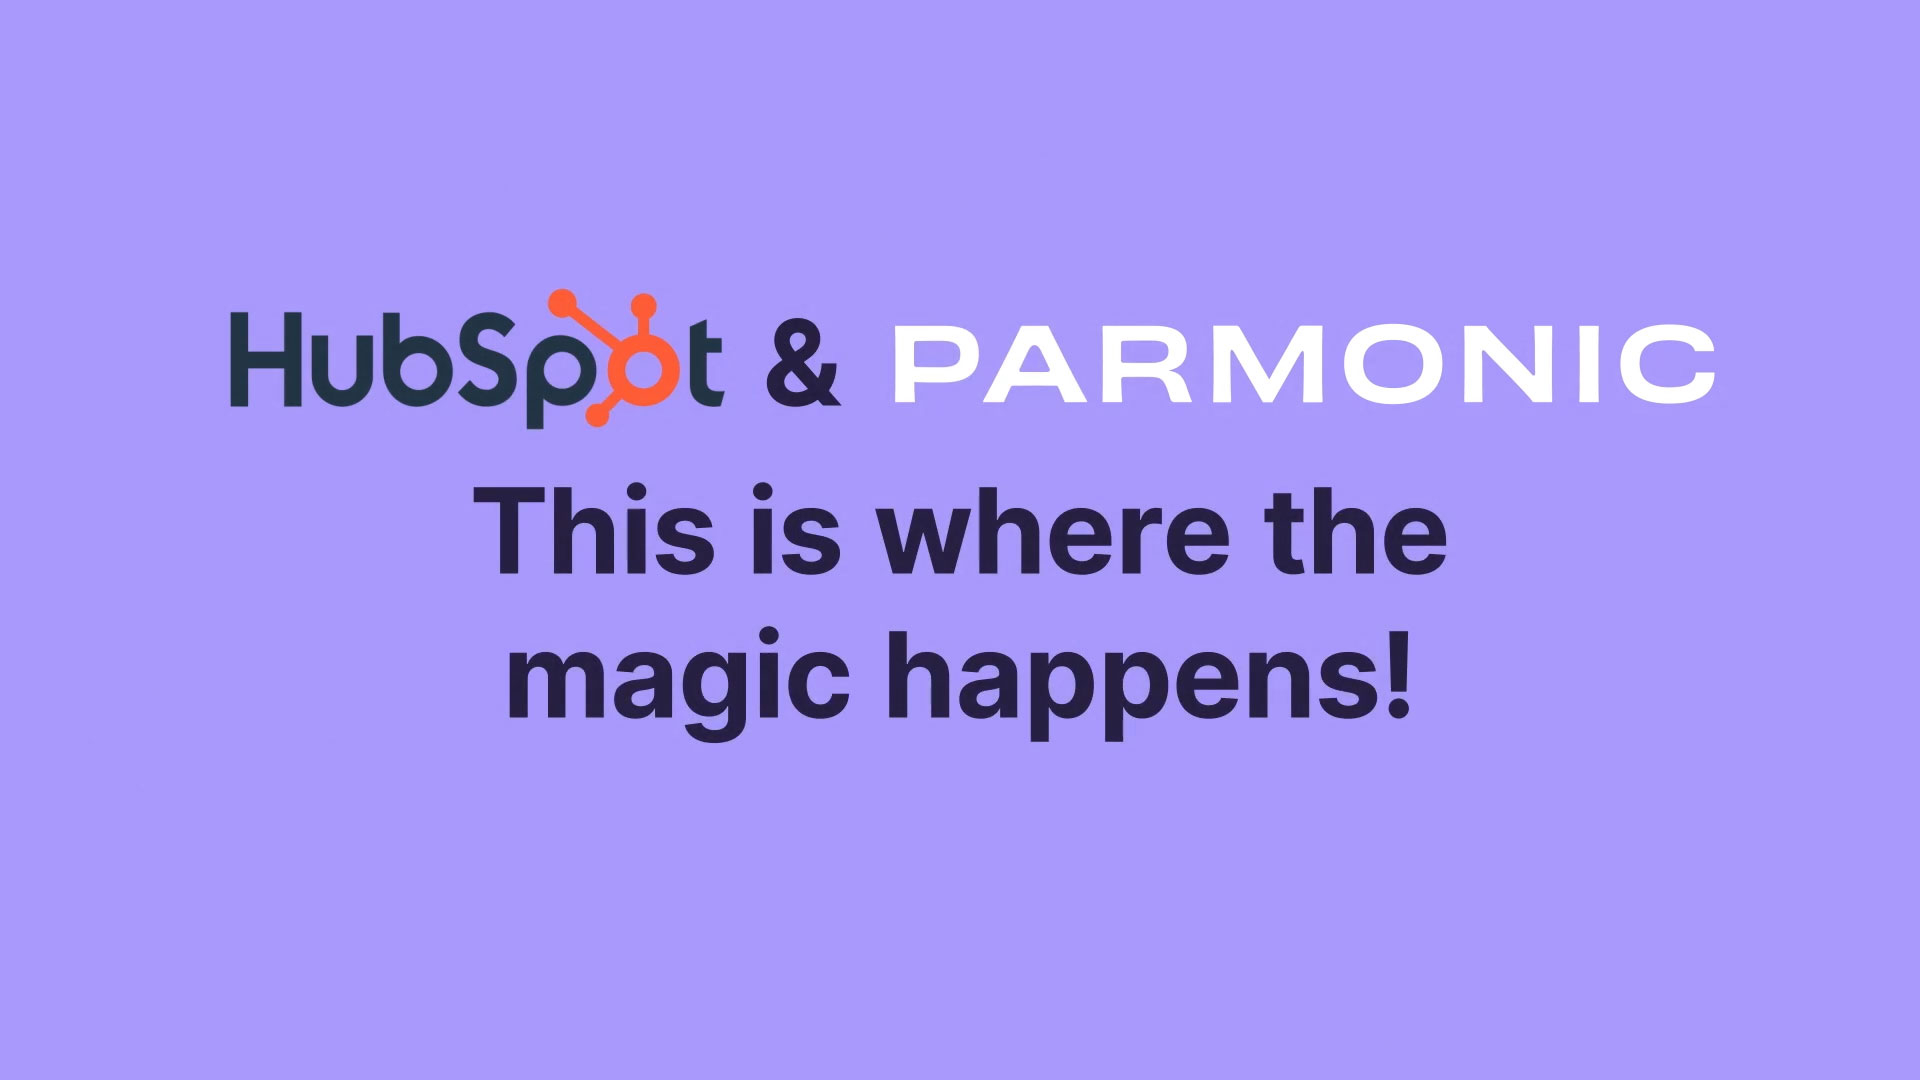 Make marketing magic by integrating Parmonic and HubSpot.